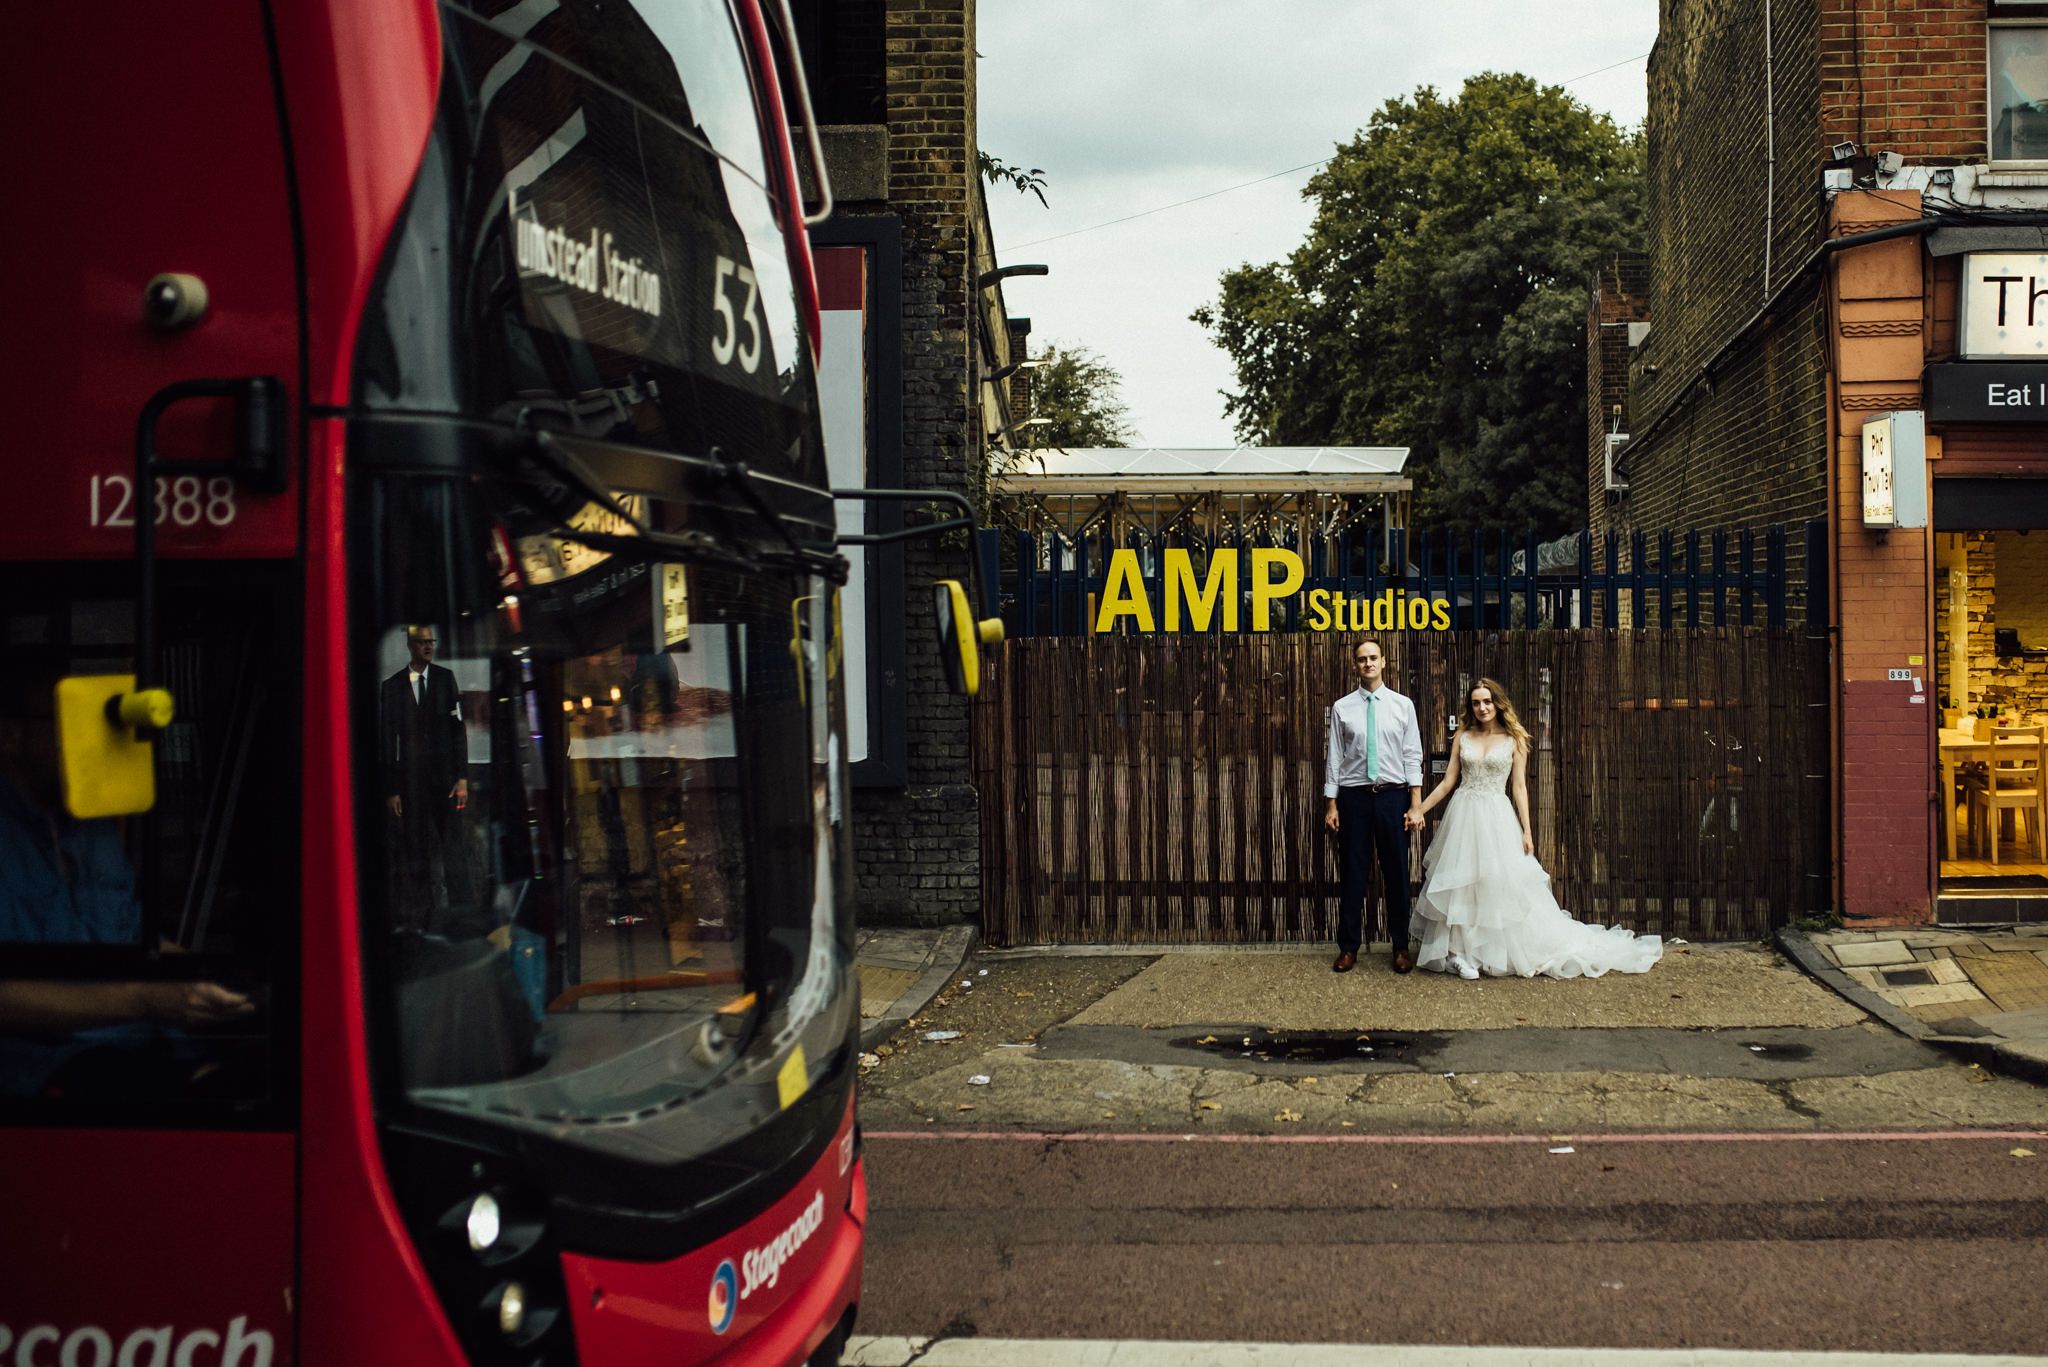 asylum chapel wedding photographer, peckham wedding, south london wedding venue, london wedding photographer